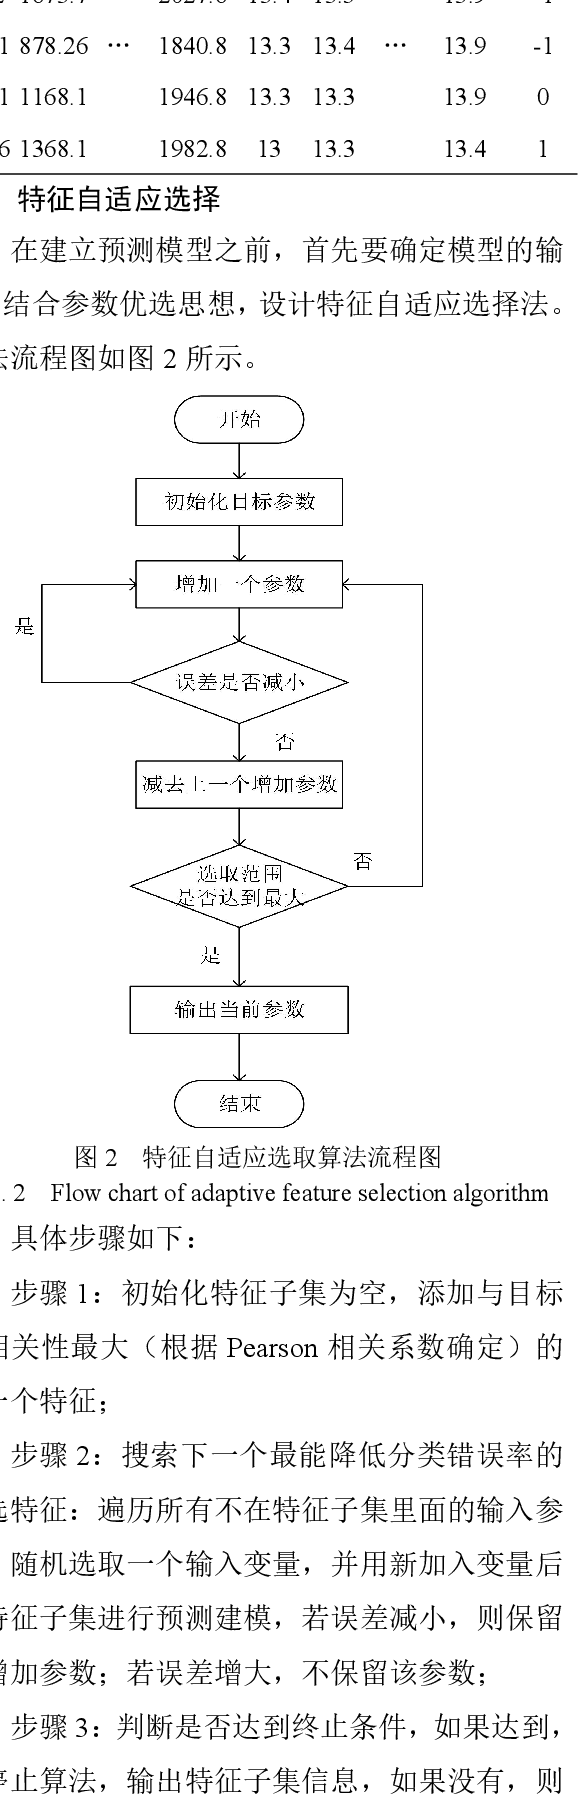 Figure 3 for Wind power ramp prediction algorithm based on wavelet deep belief network